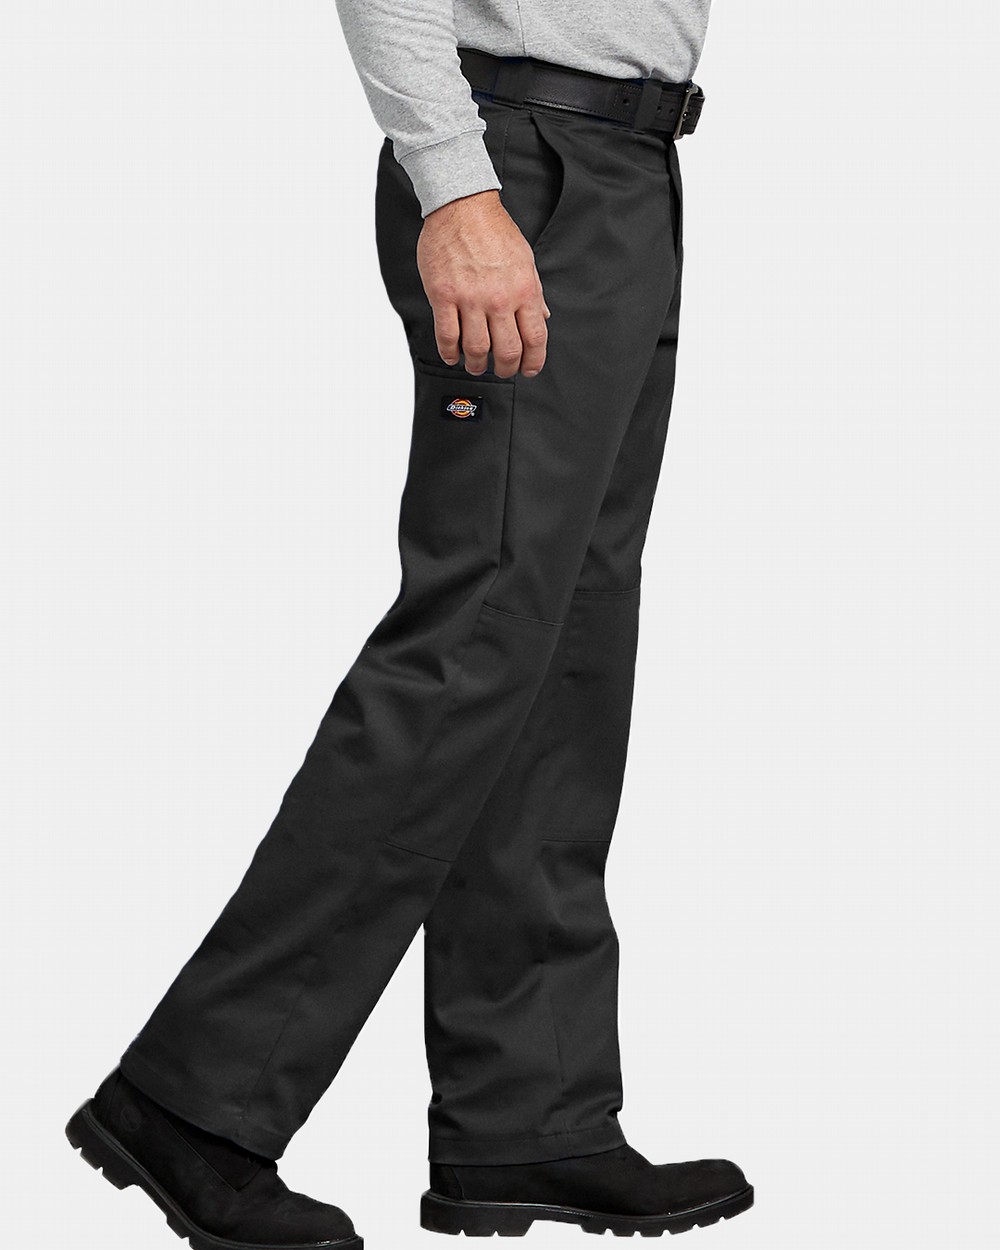 Mens Work Pants in Mens Occupational and Workwear  Walmartcom